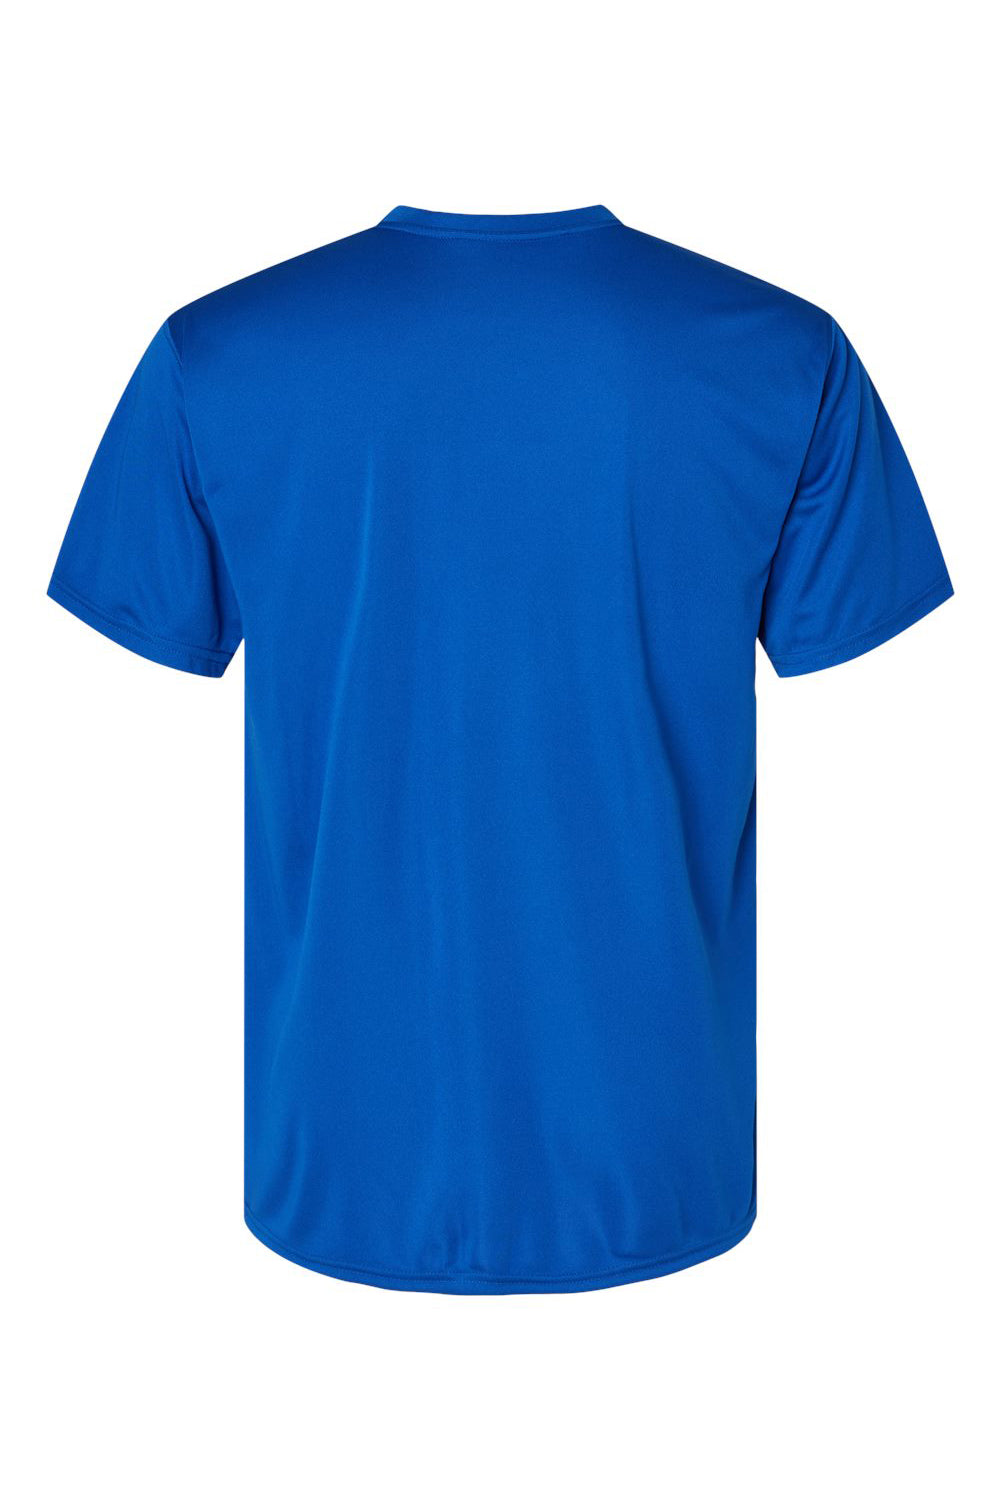 Holloway 222818 Mens Momentum Short Sleeve Crewneck T-Shirt Royal Blue Flat Back